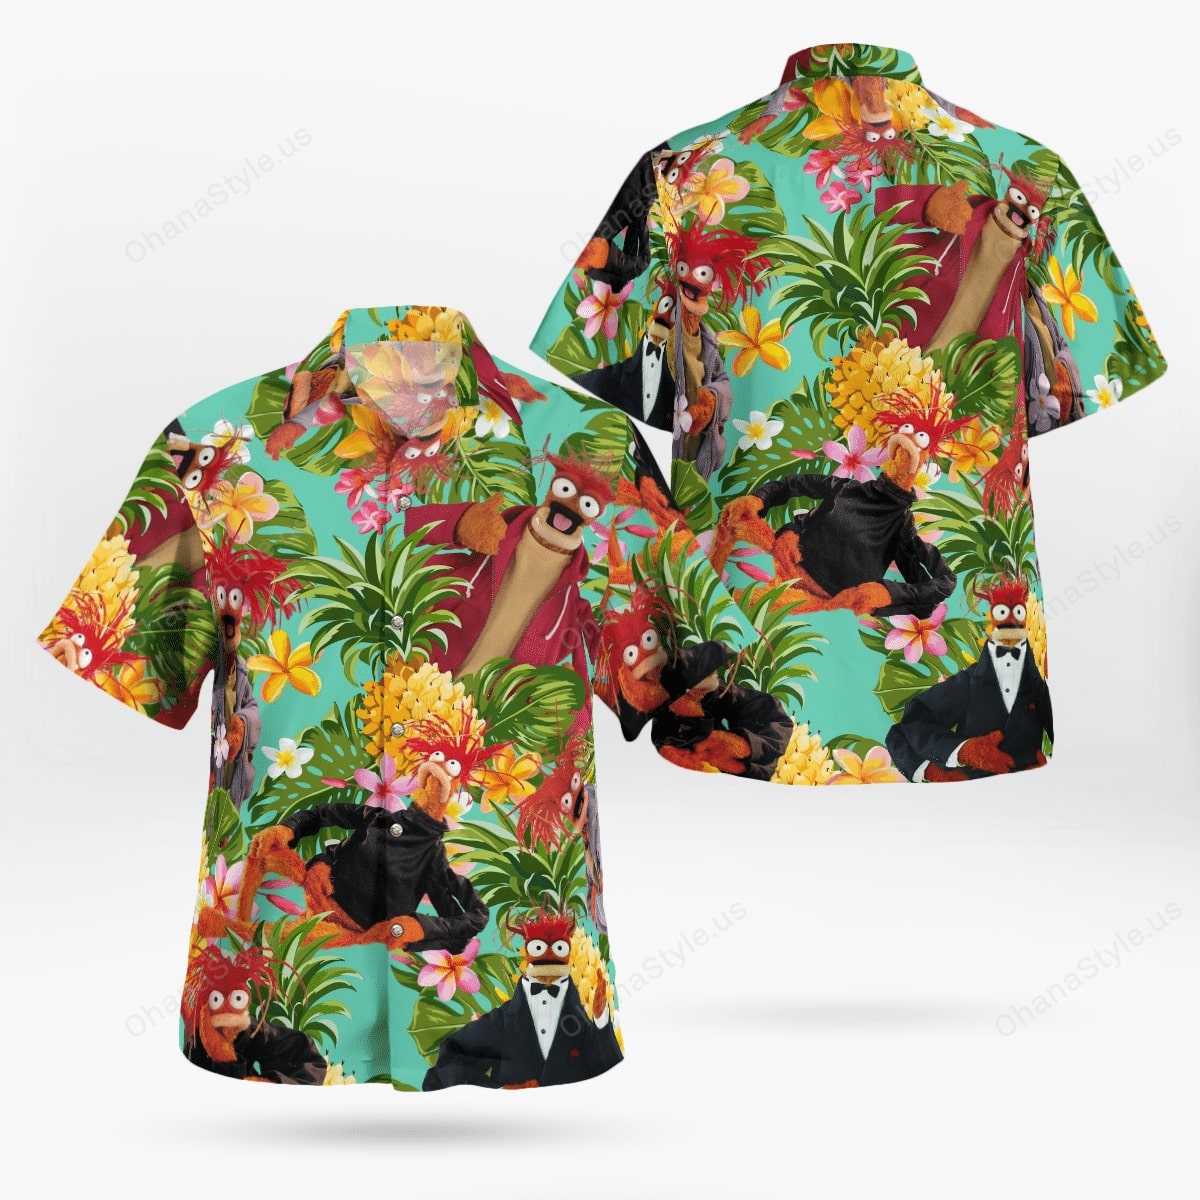 Pepé the King Prawn tropical hawaiian shirt